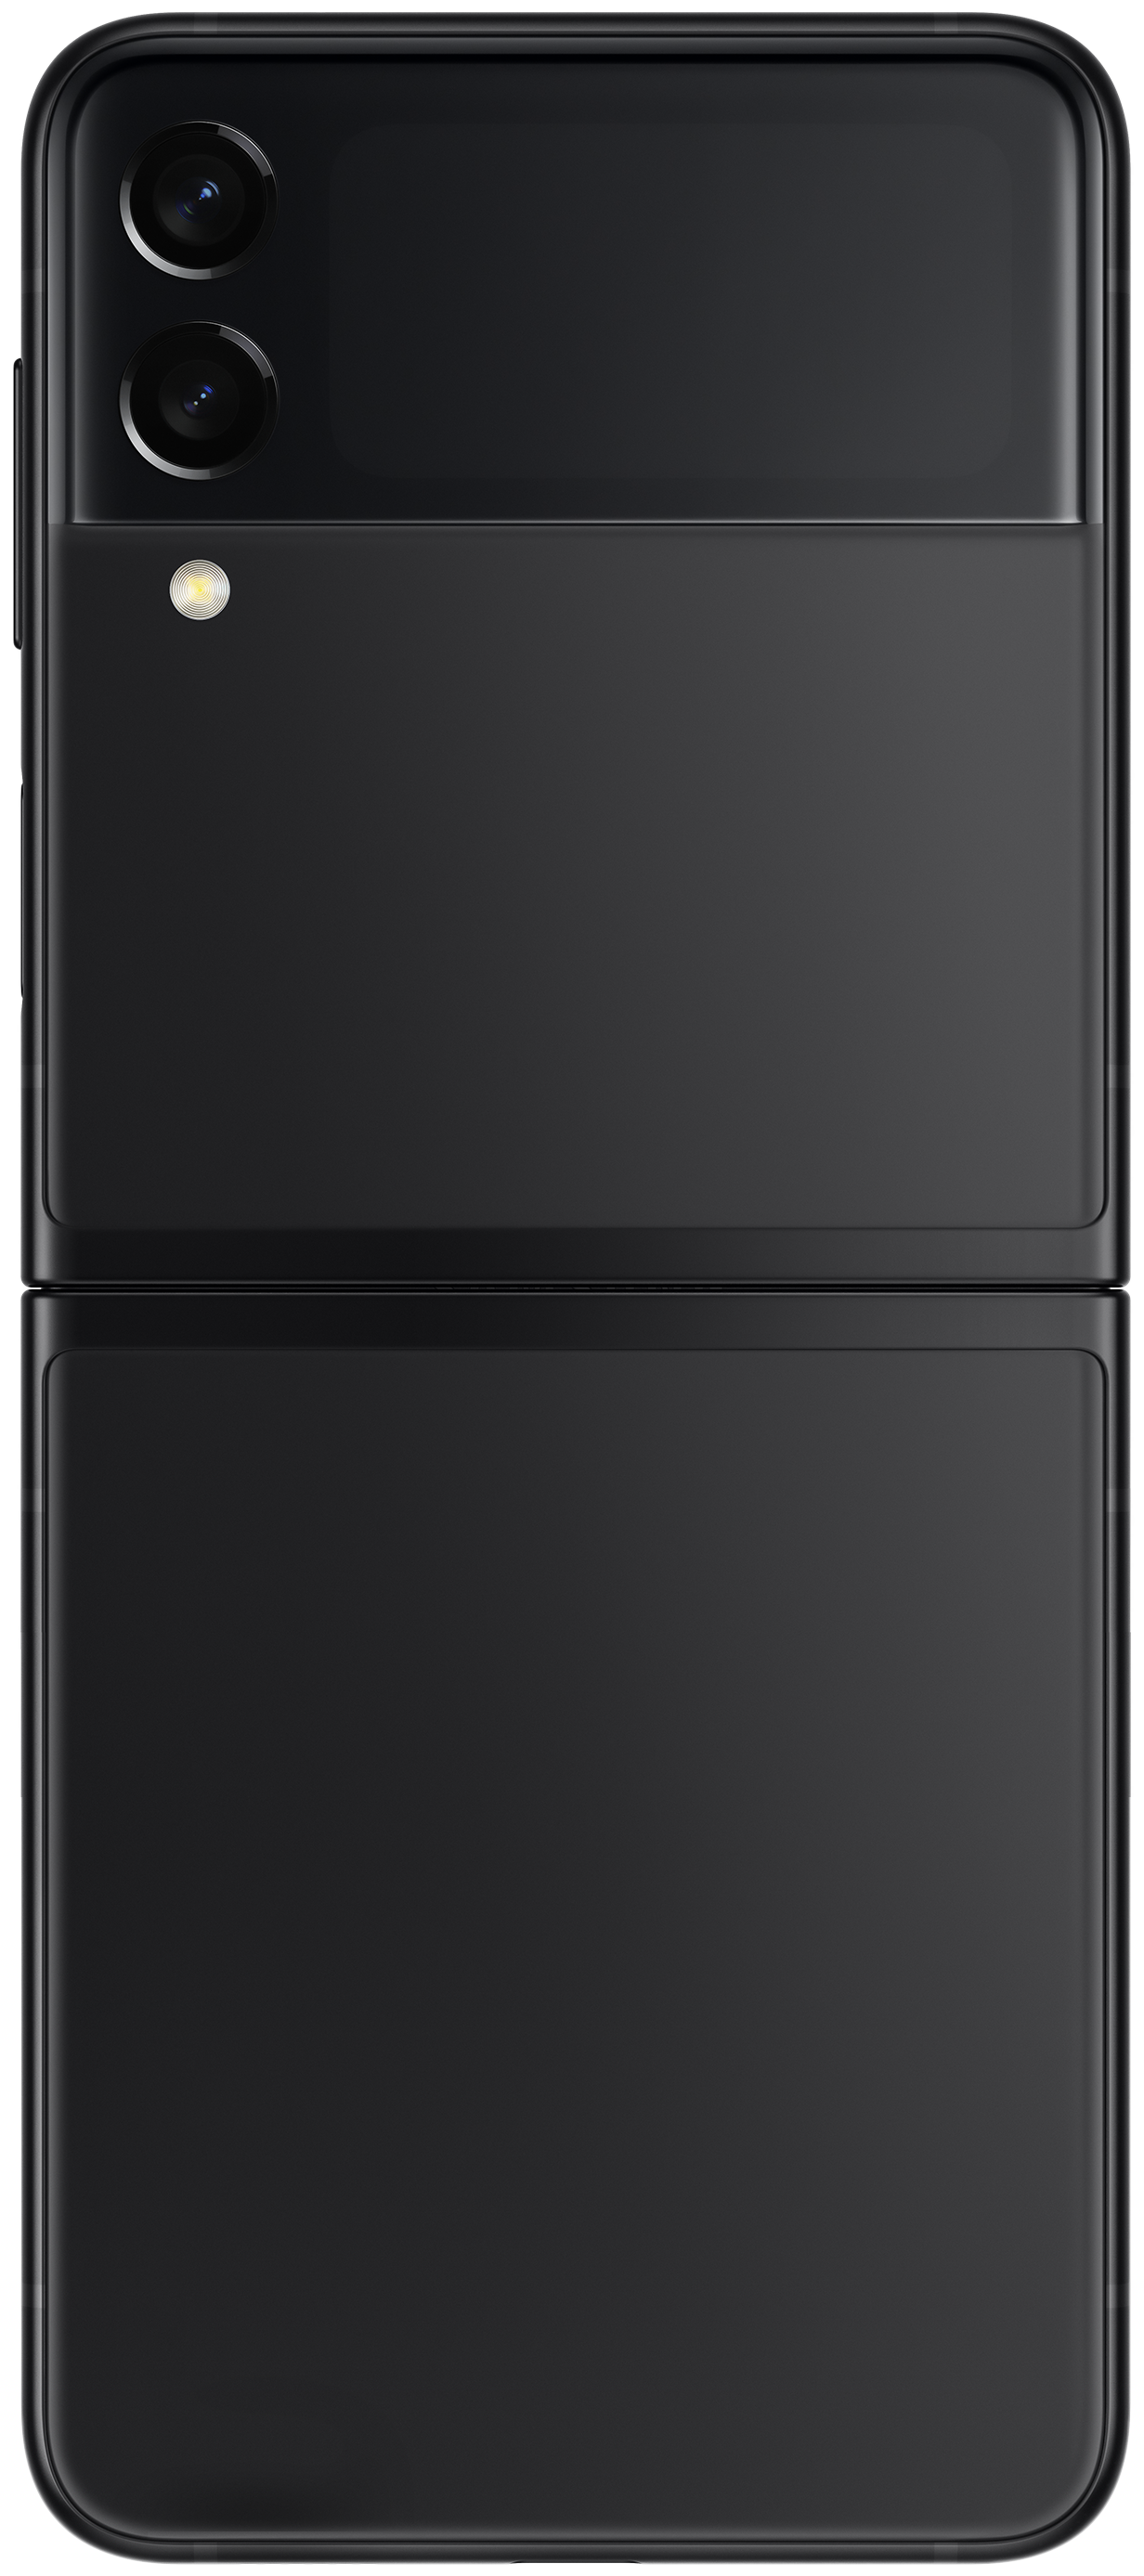 картинка Смартфон Samsung Galaxy Z Flip3 8/256GB (черный) от магазина Технолав